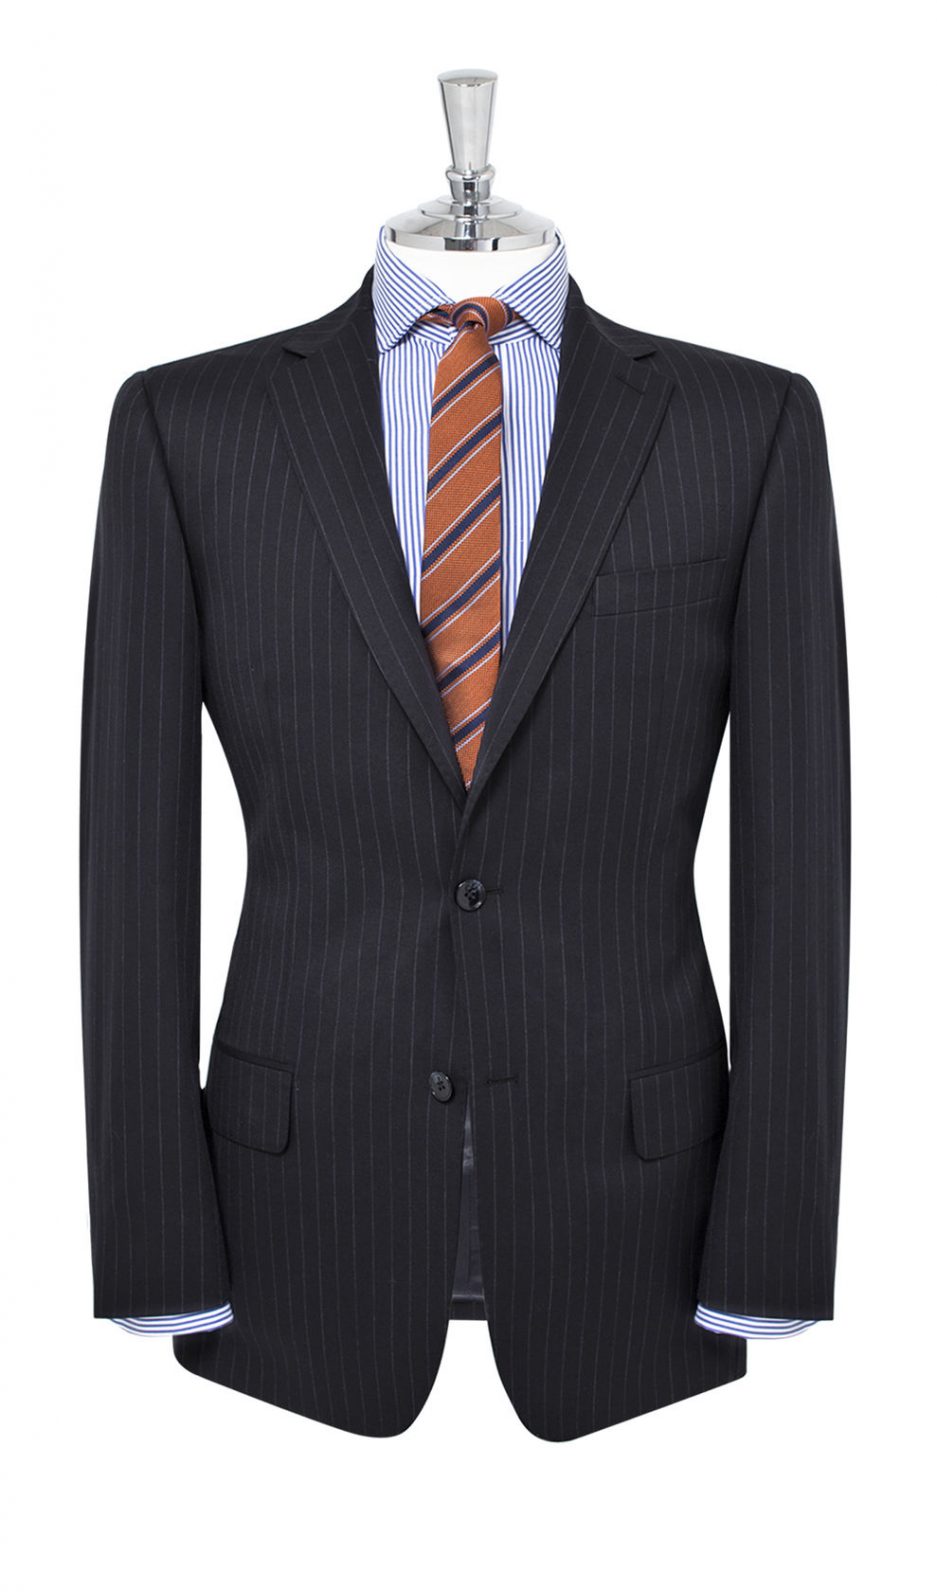 work suit for men, slim fit bespoke suit